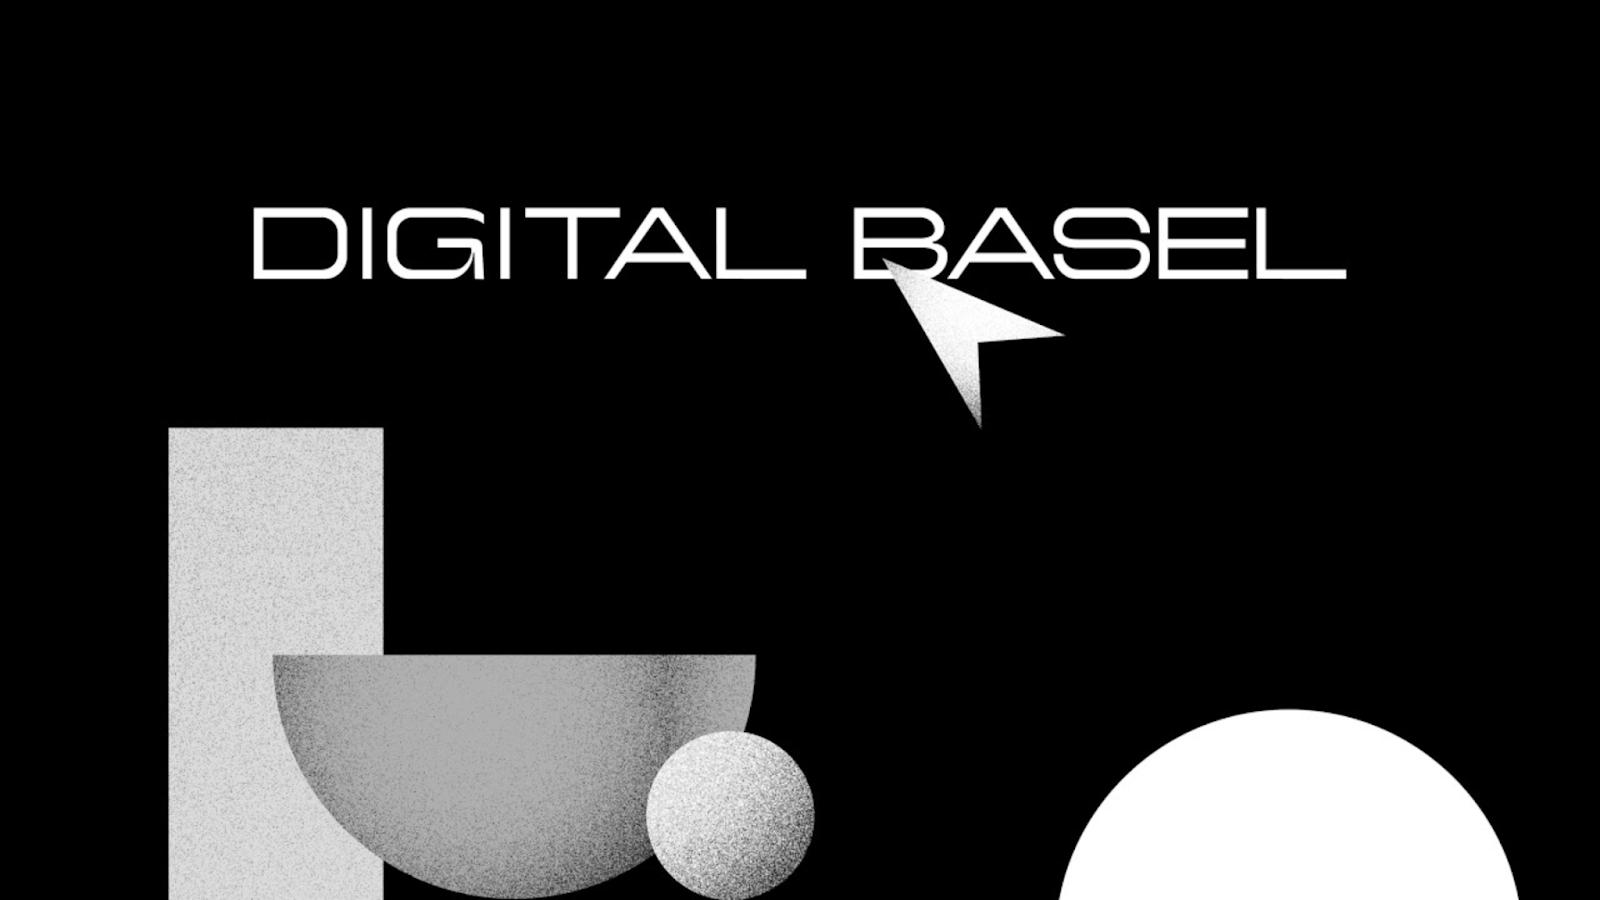 Specialized Marketplaces: Digital Basel